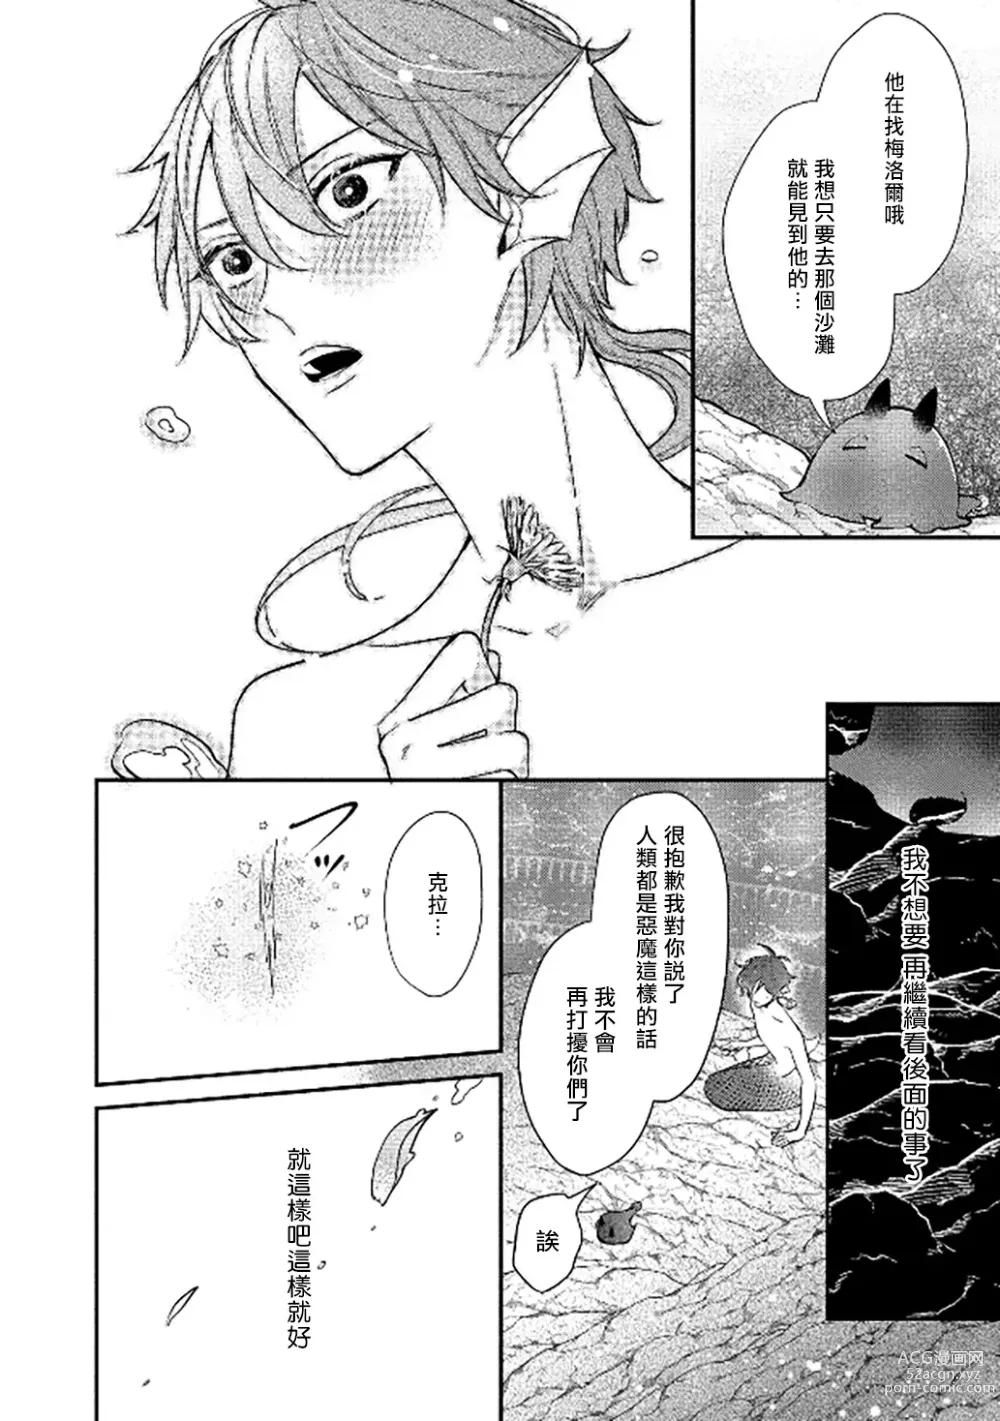 Page 72 of manga 人鱼与王子与骗子恶魔 act.1-2